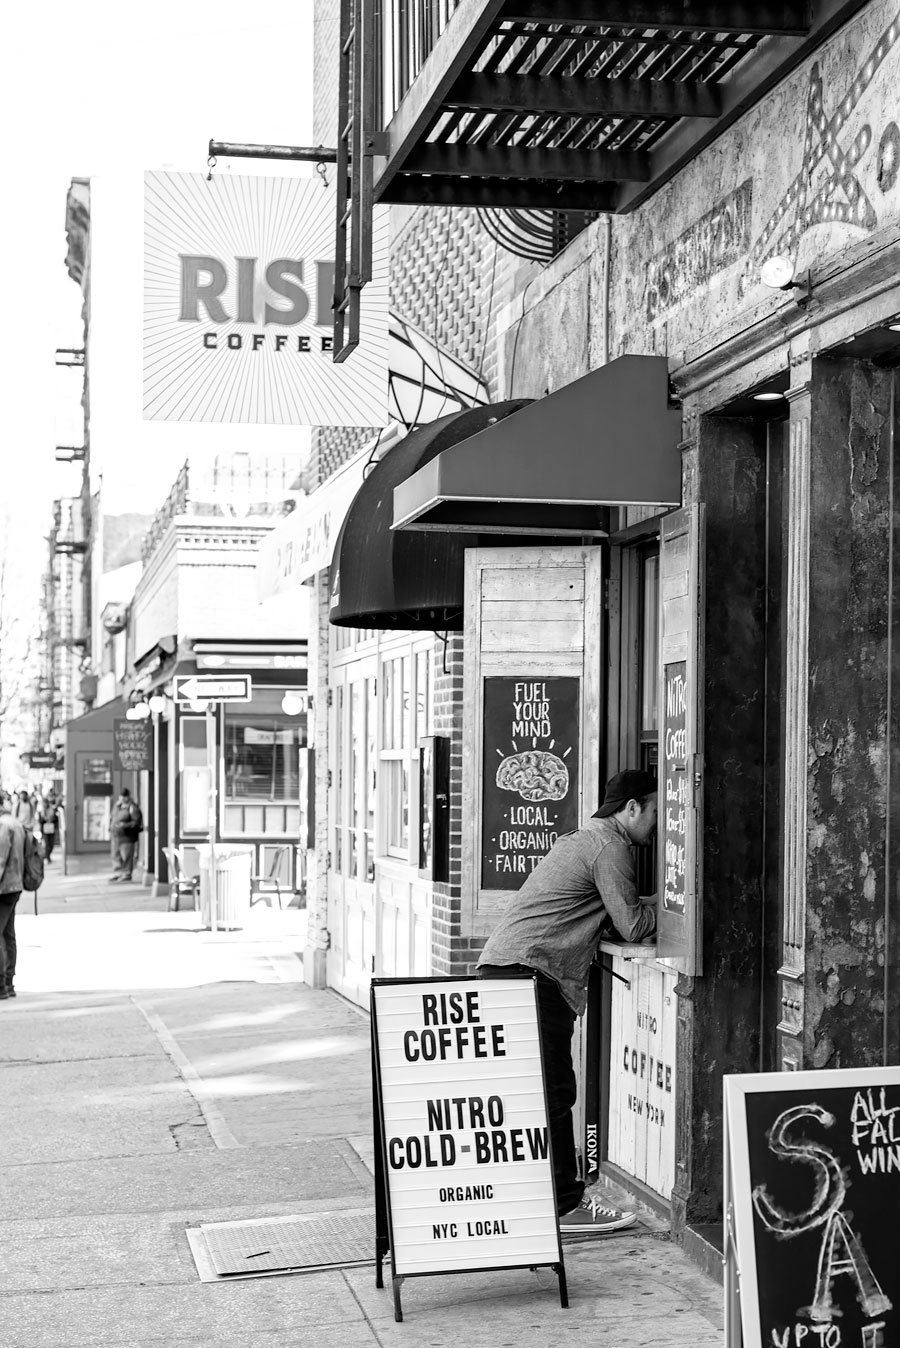 Rise Coffee in New York. More New York moments in black & white on Urban Pixxels: http://urbanpixxels.com/new-york-bw 